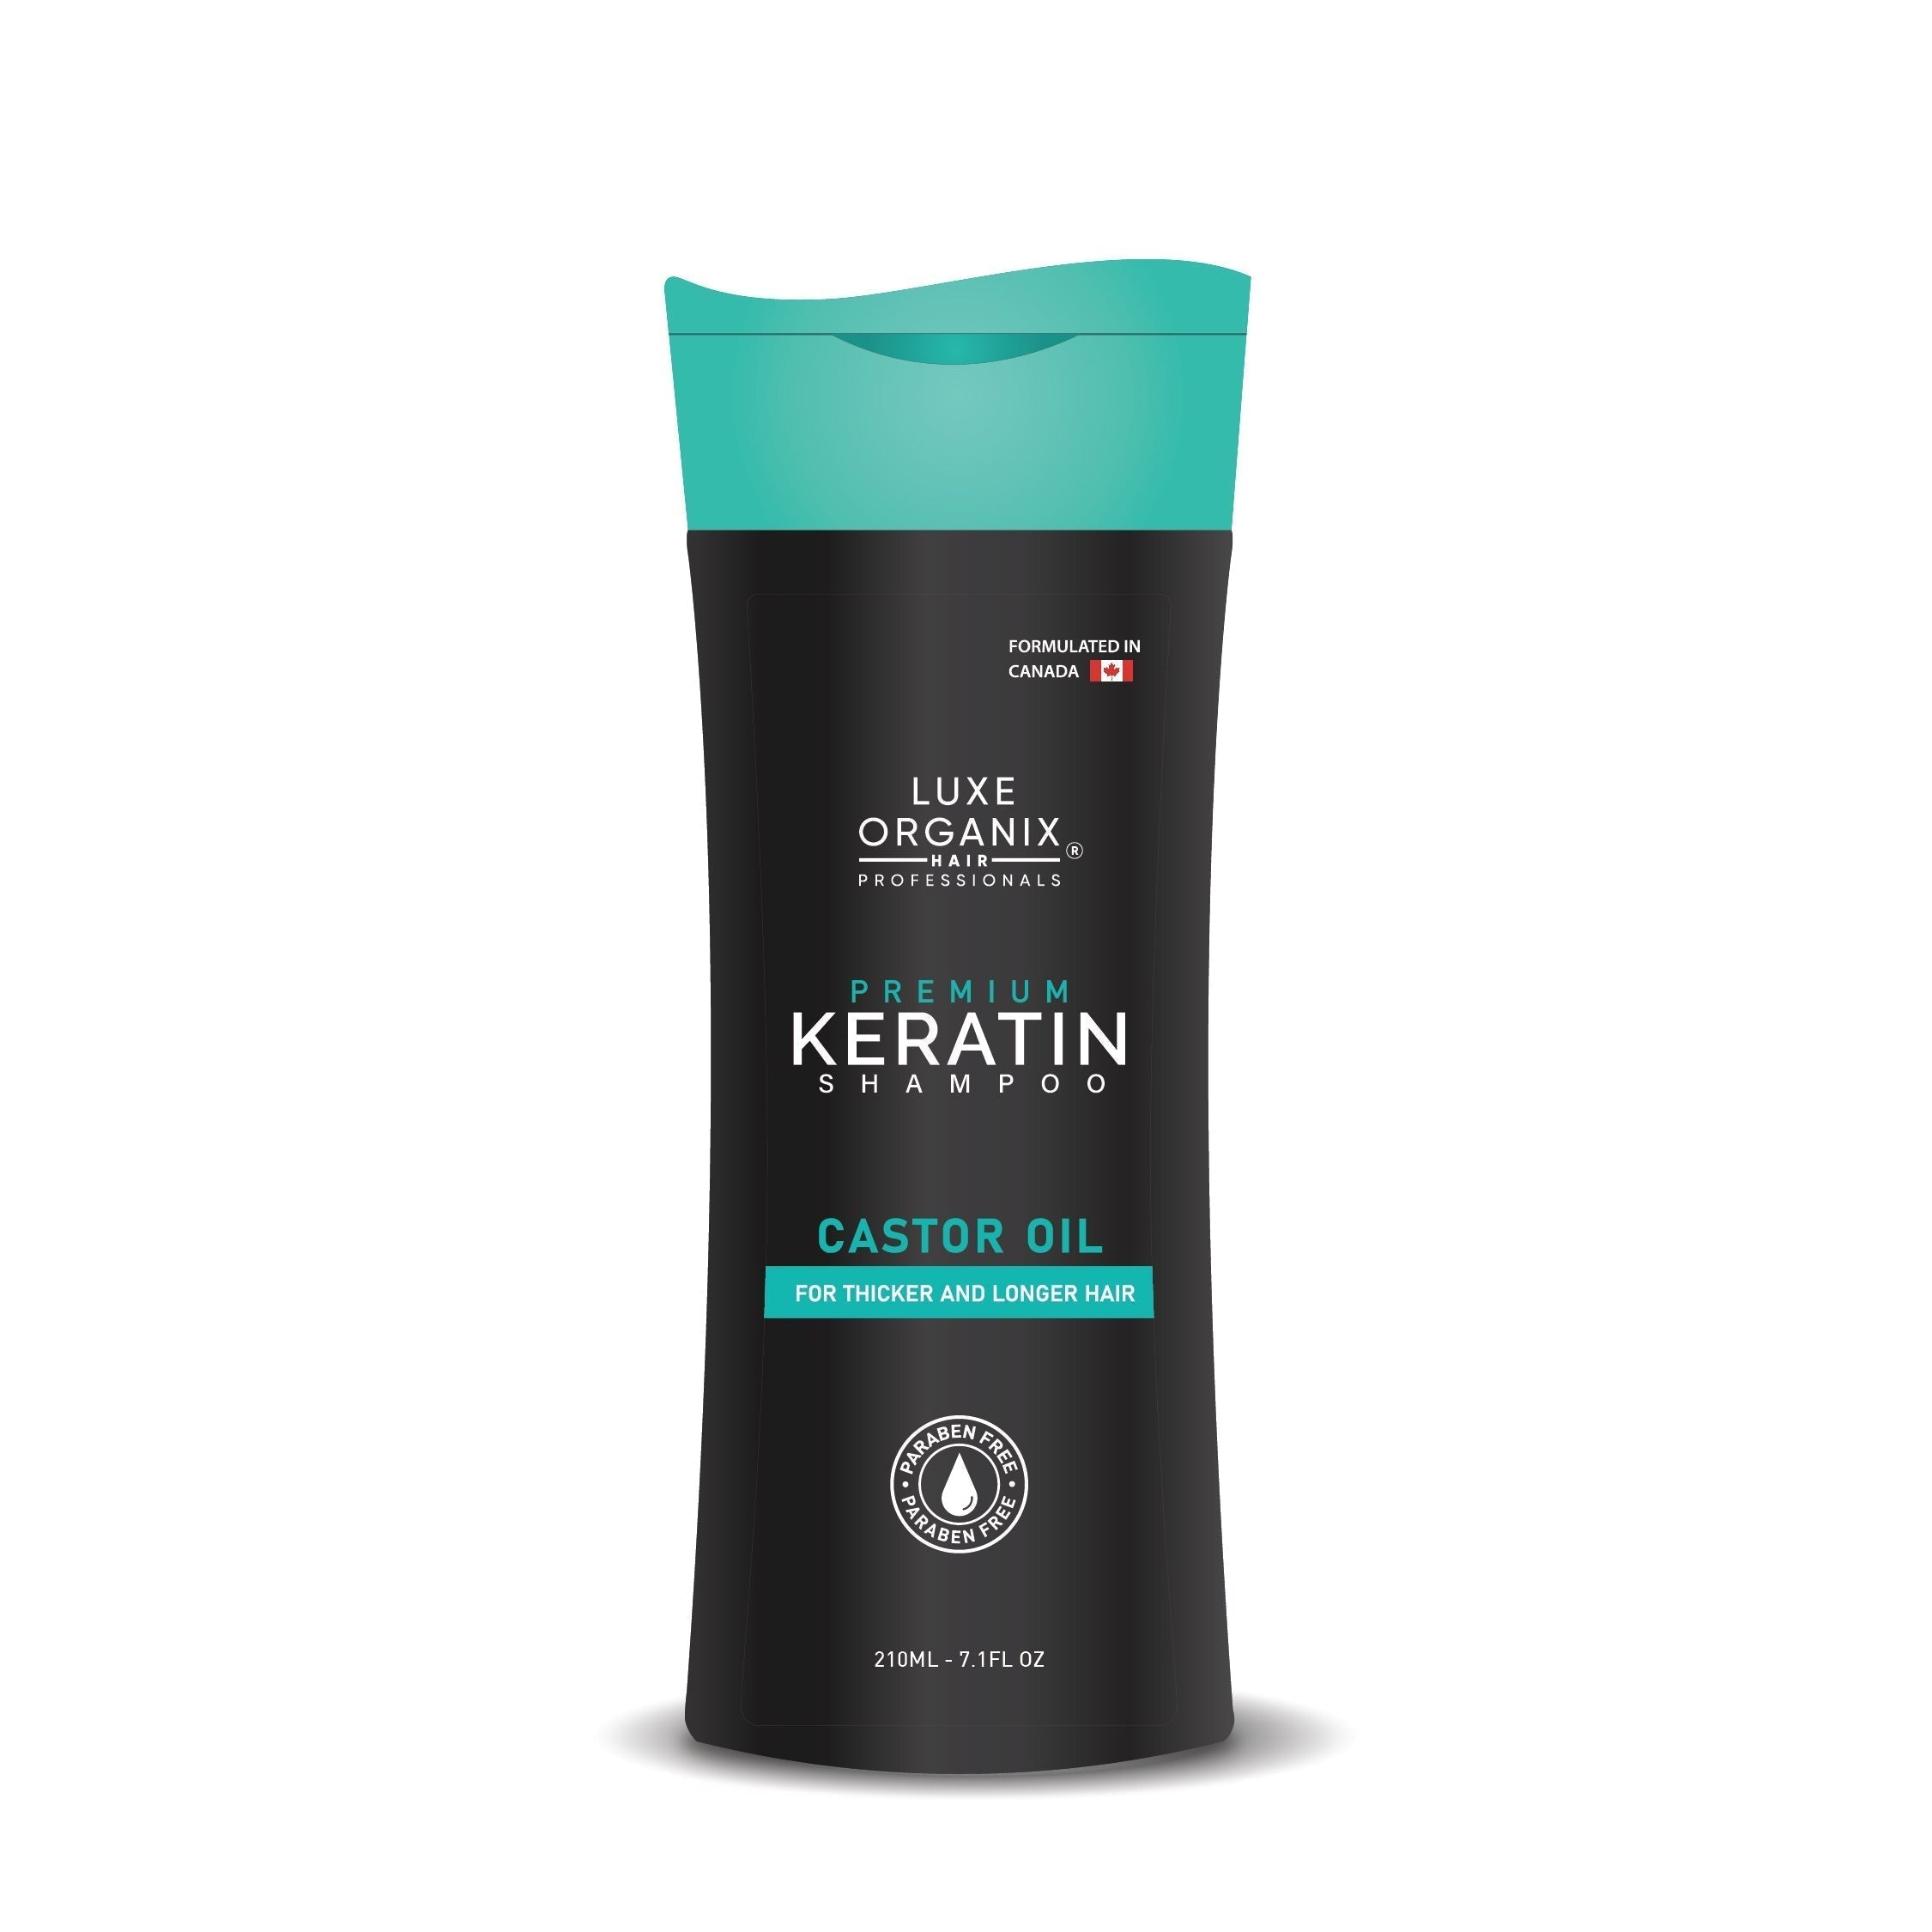 Premium Keratin Shampoo 210ml (Castor Oil)